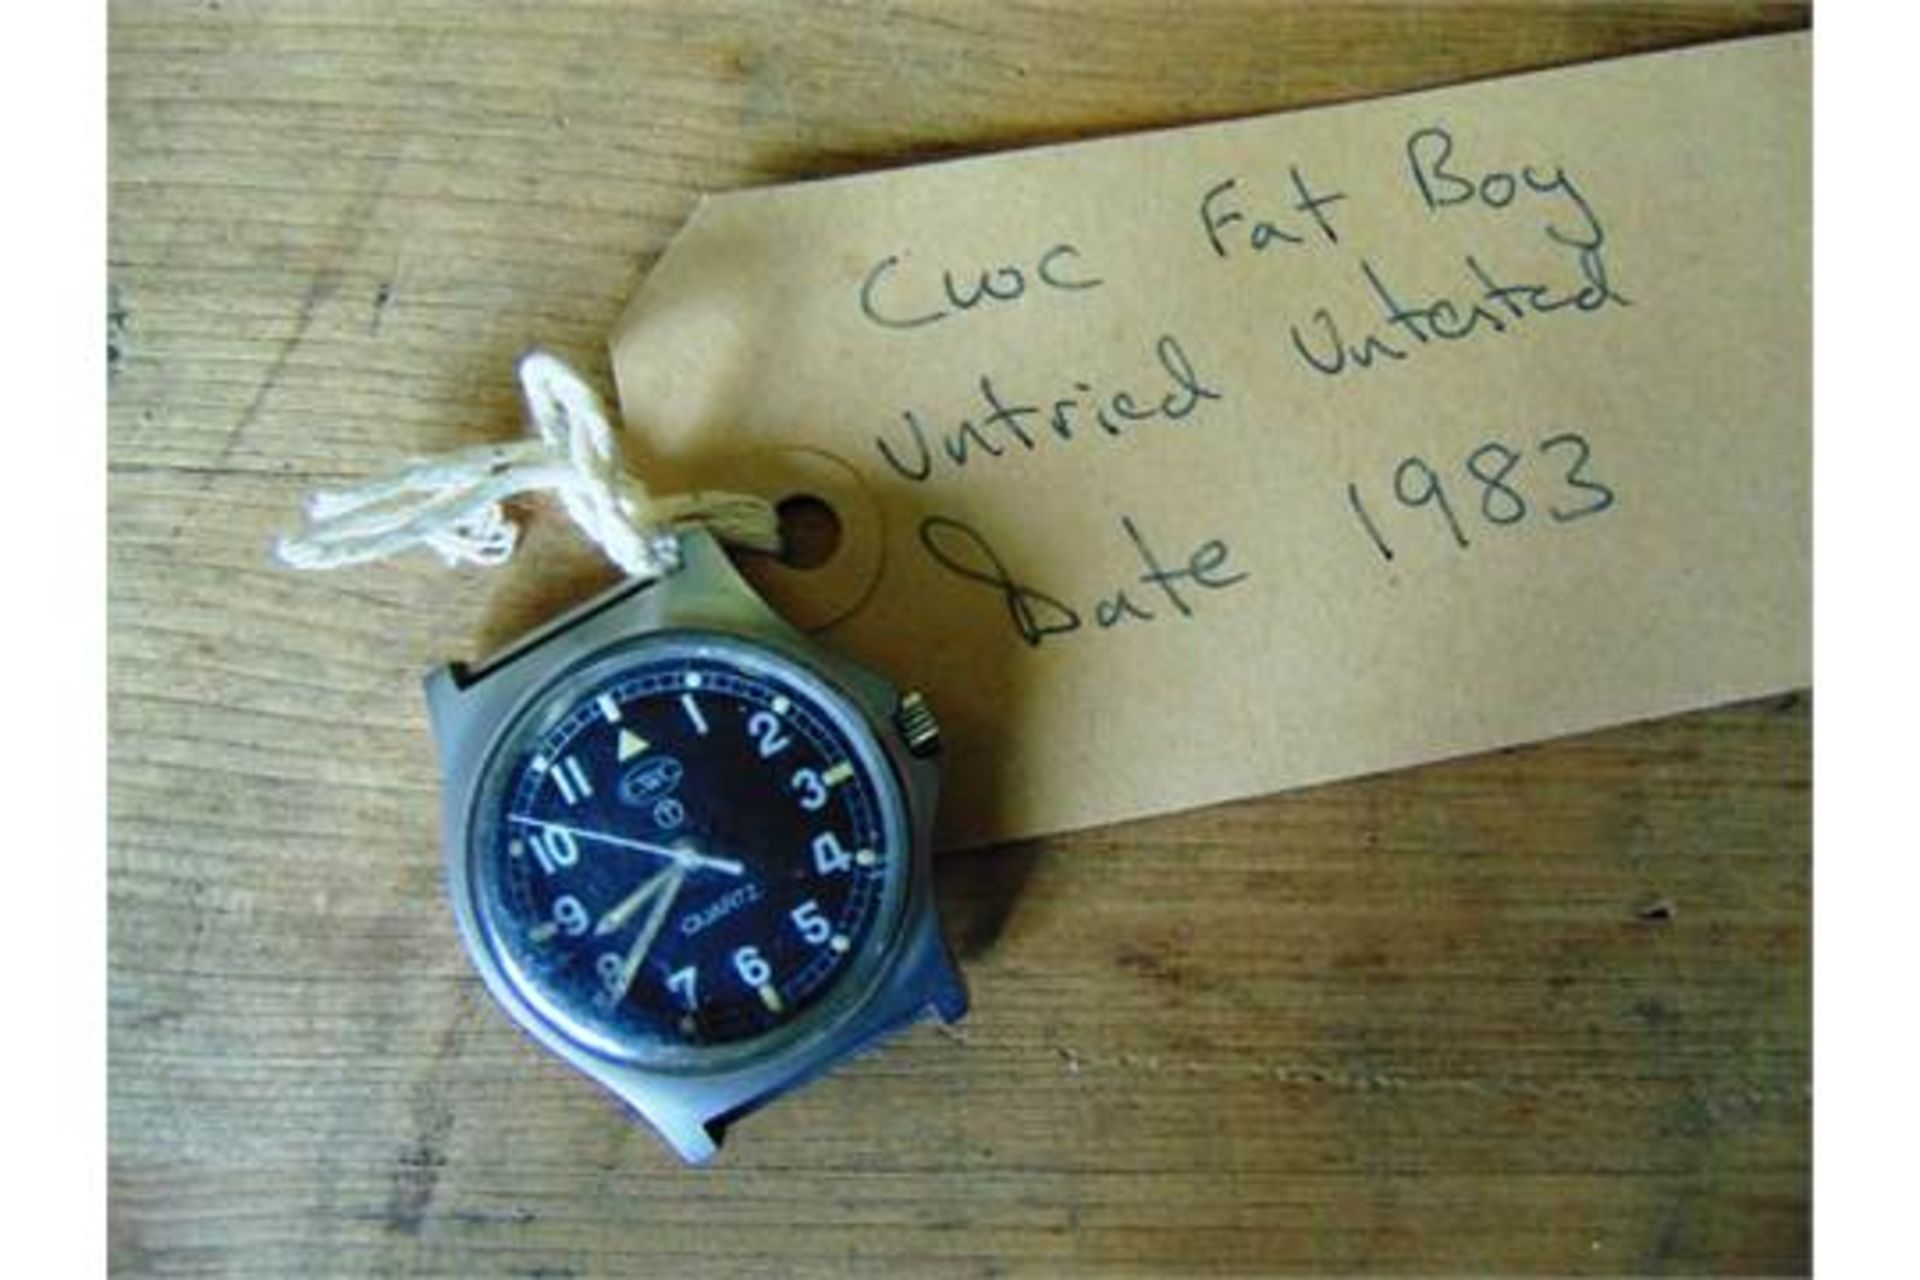 Genuine British Army CWC (Fat Boy/Fat Case) Quartz Wrist Watch - Image 2 of 3